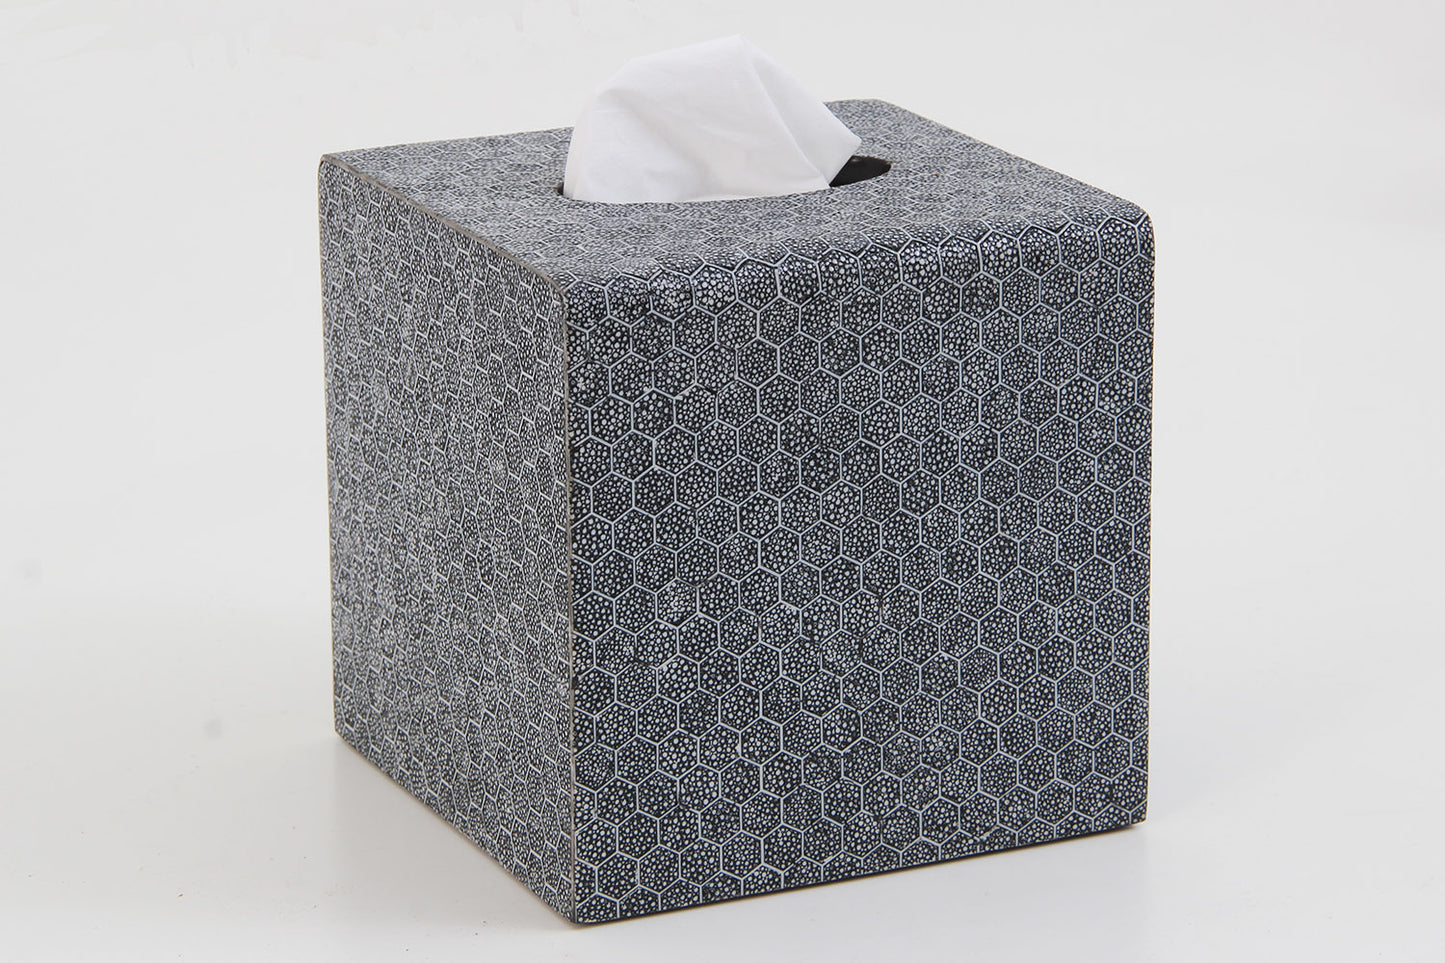 Tissue holder chic grey shagreen tissue box